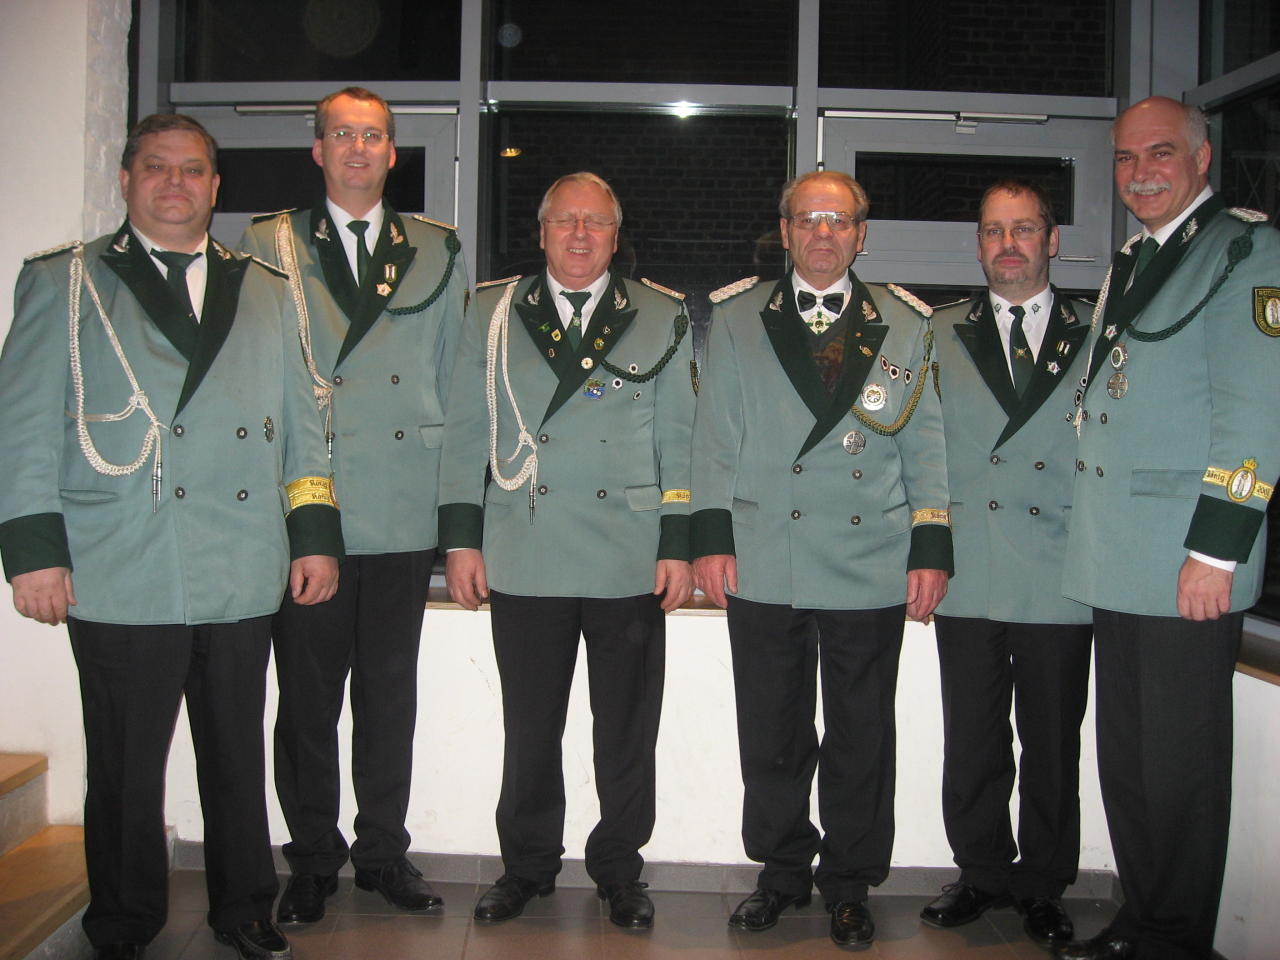 Vorstand 2009: v.l.n.r: Karl Remus, Michael Gerken, Dieter Breuer, Hans-Gert Clemens, Michael Niehsen, Gebhard Gerken 